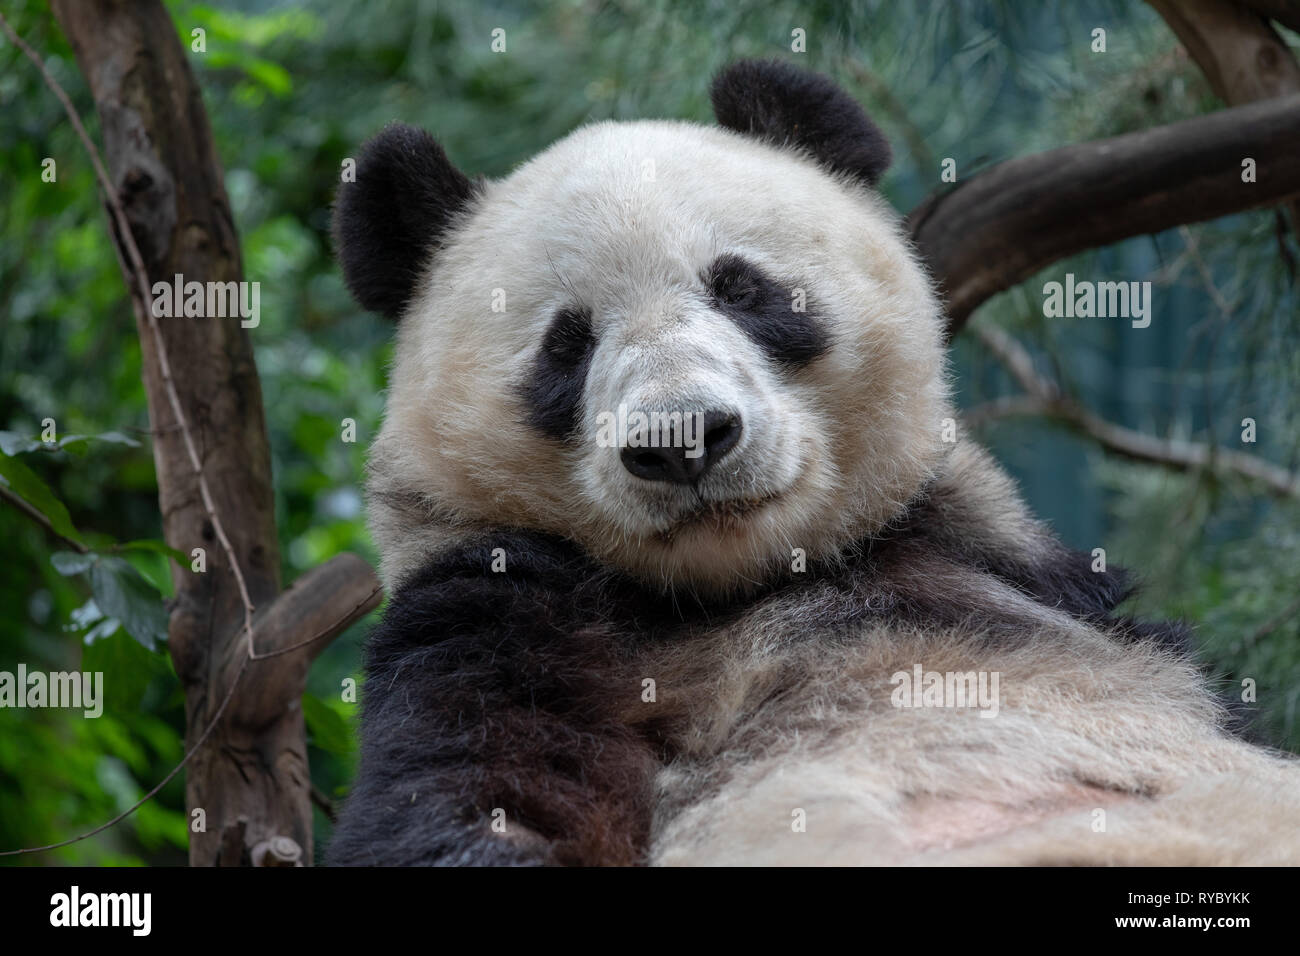 Giant Panda - San Diego Zoo Stock Photo - Alamy